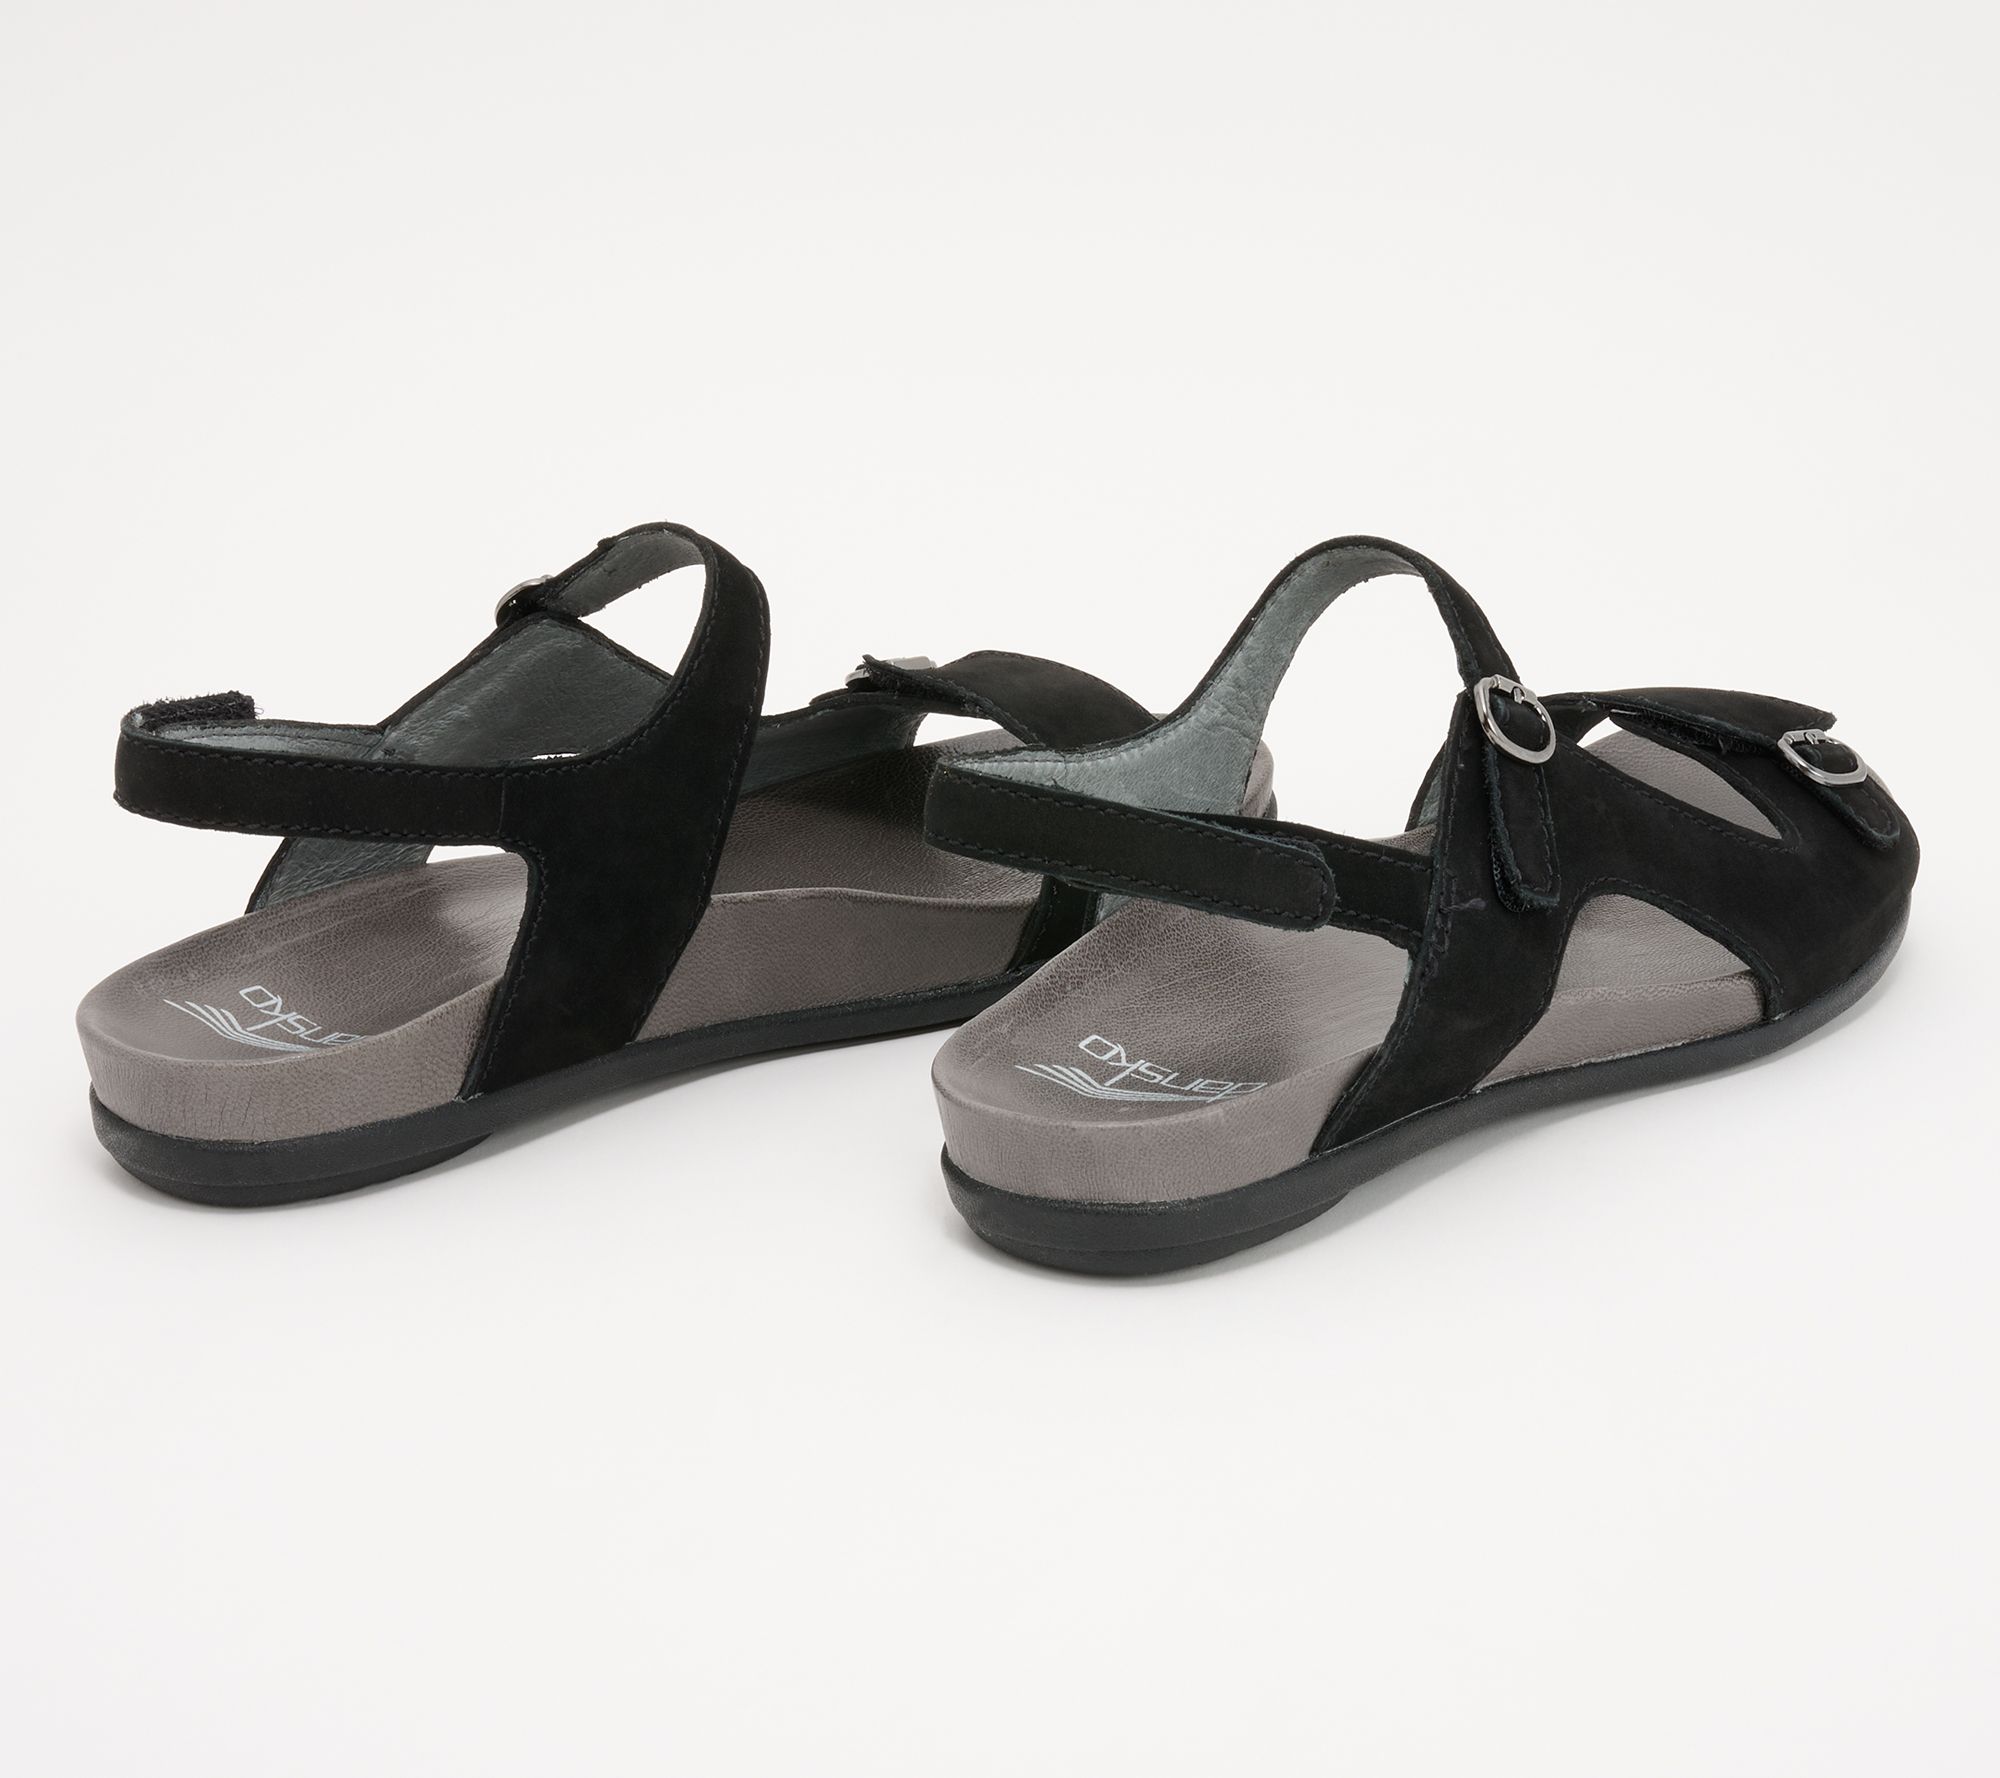 Dansko Leather Adjustable Slingback Sandals- Jordyn QVC.com